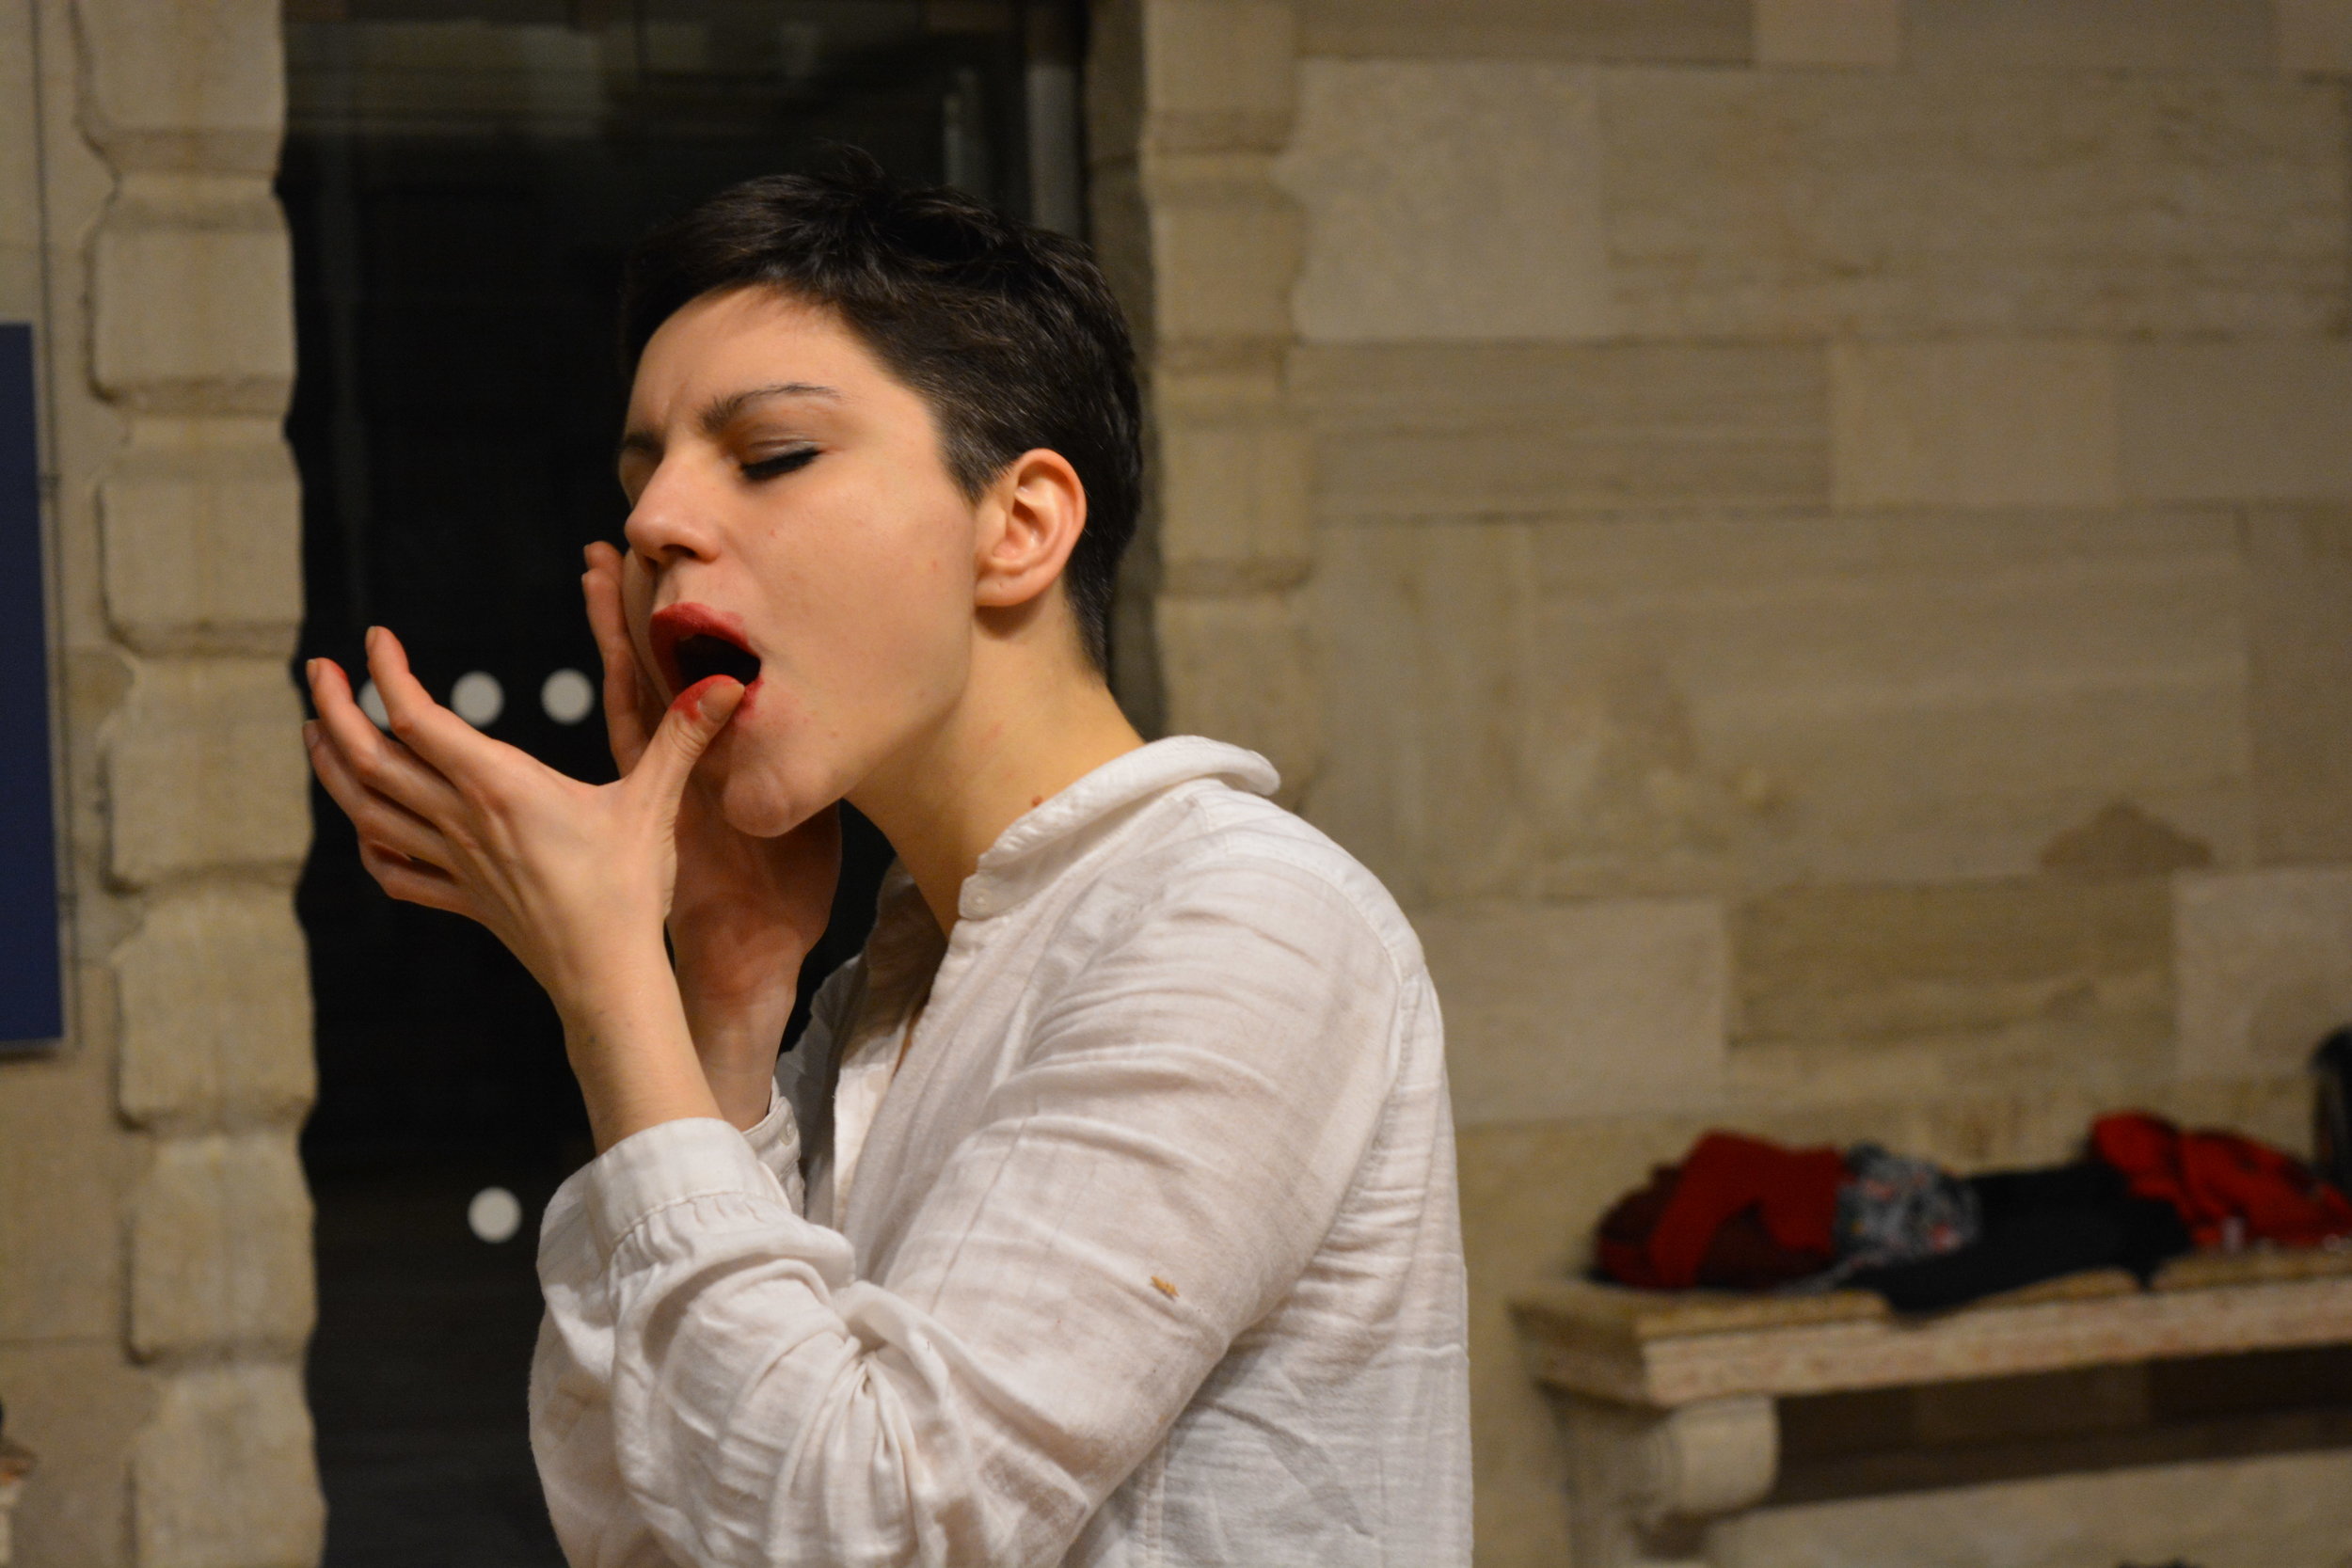 Micaela Leonardi performing as part of The Foundling, Venice, 2014 